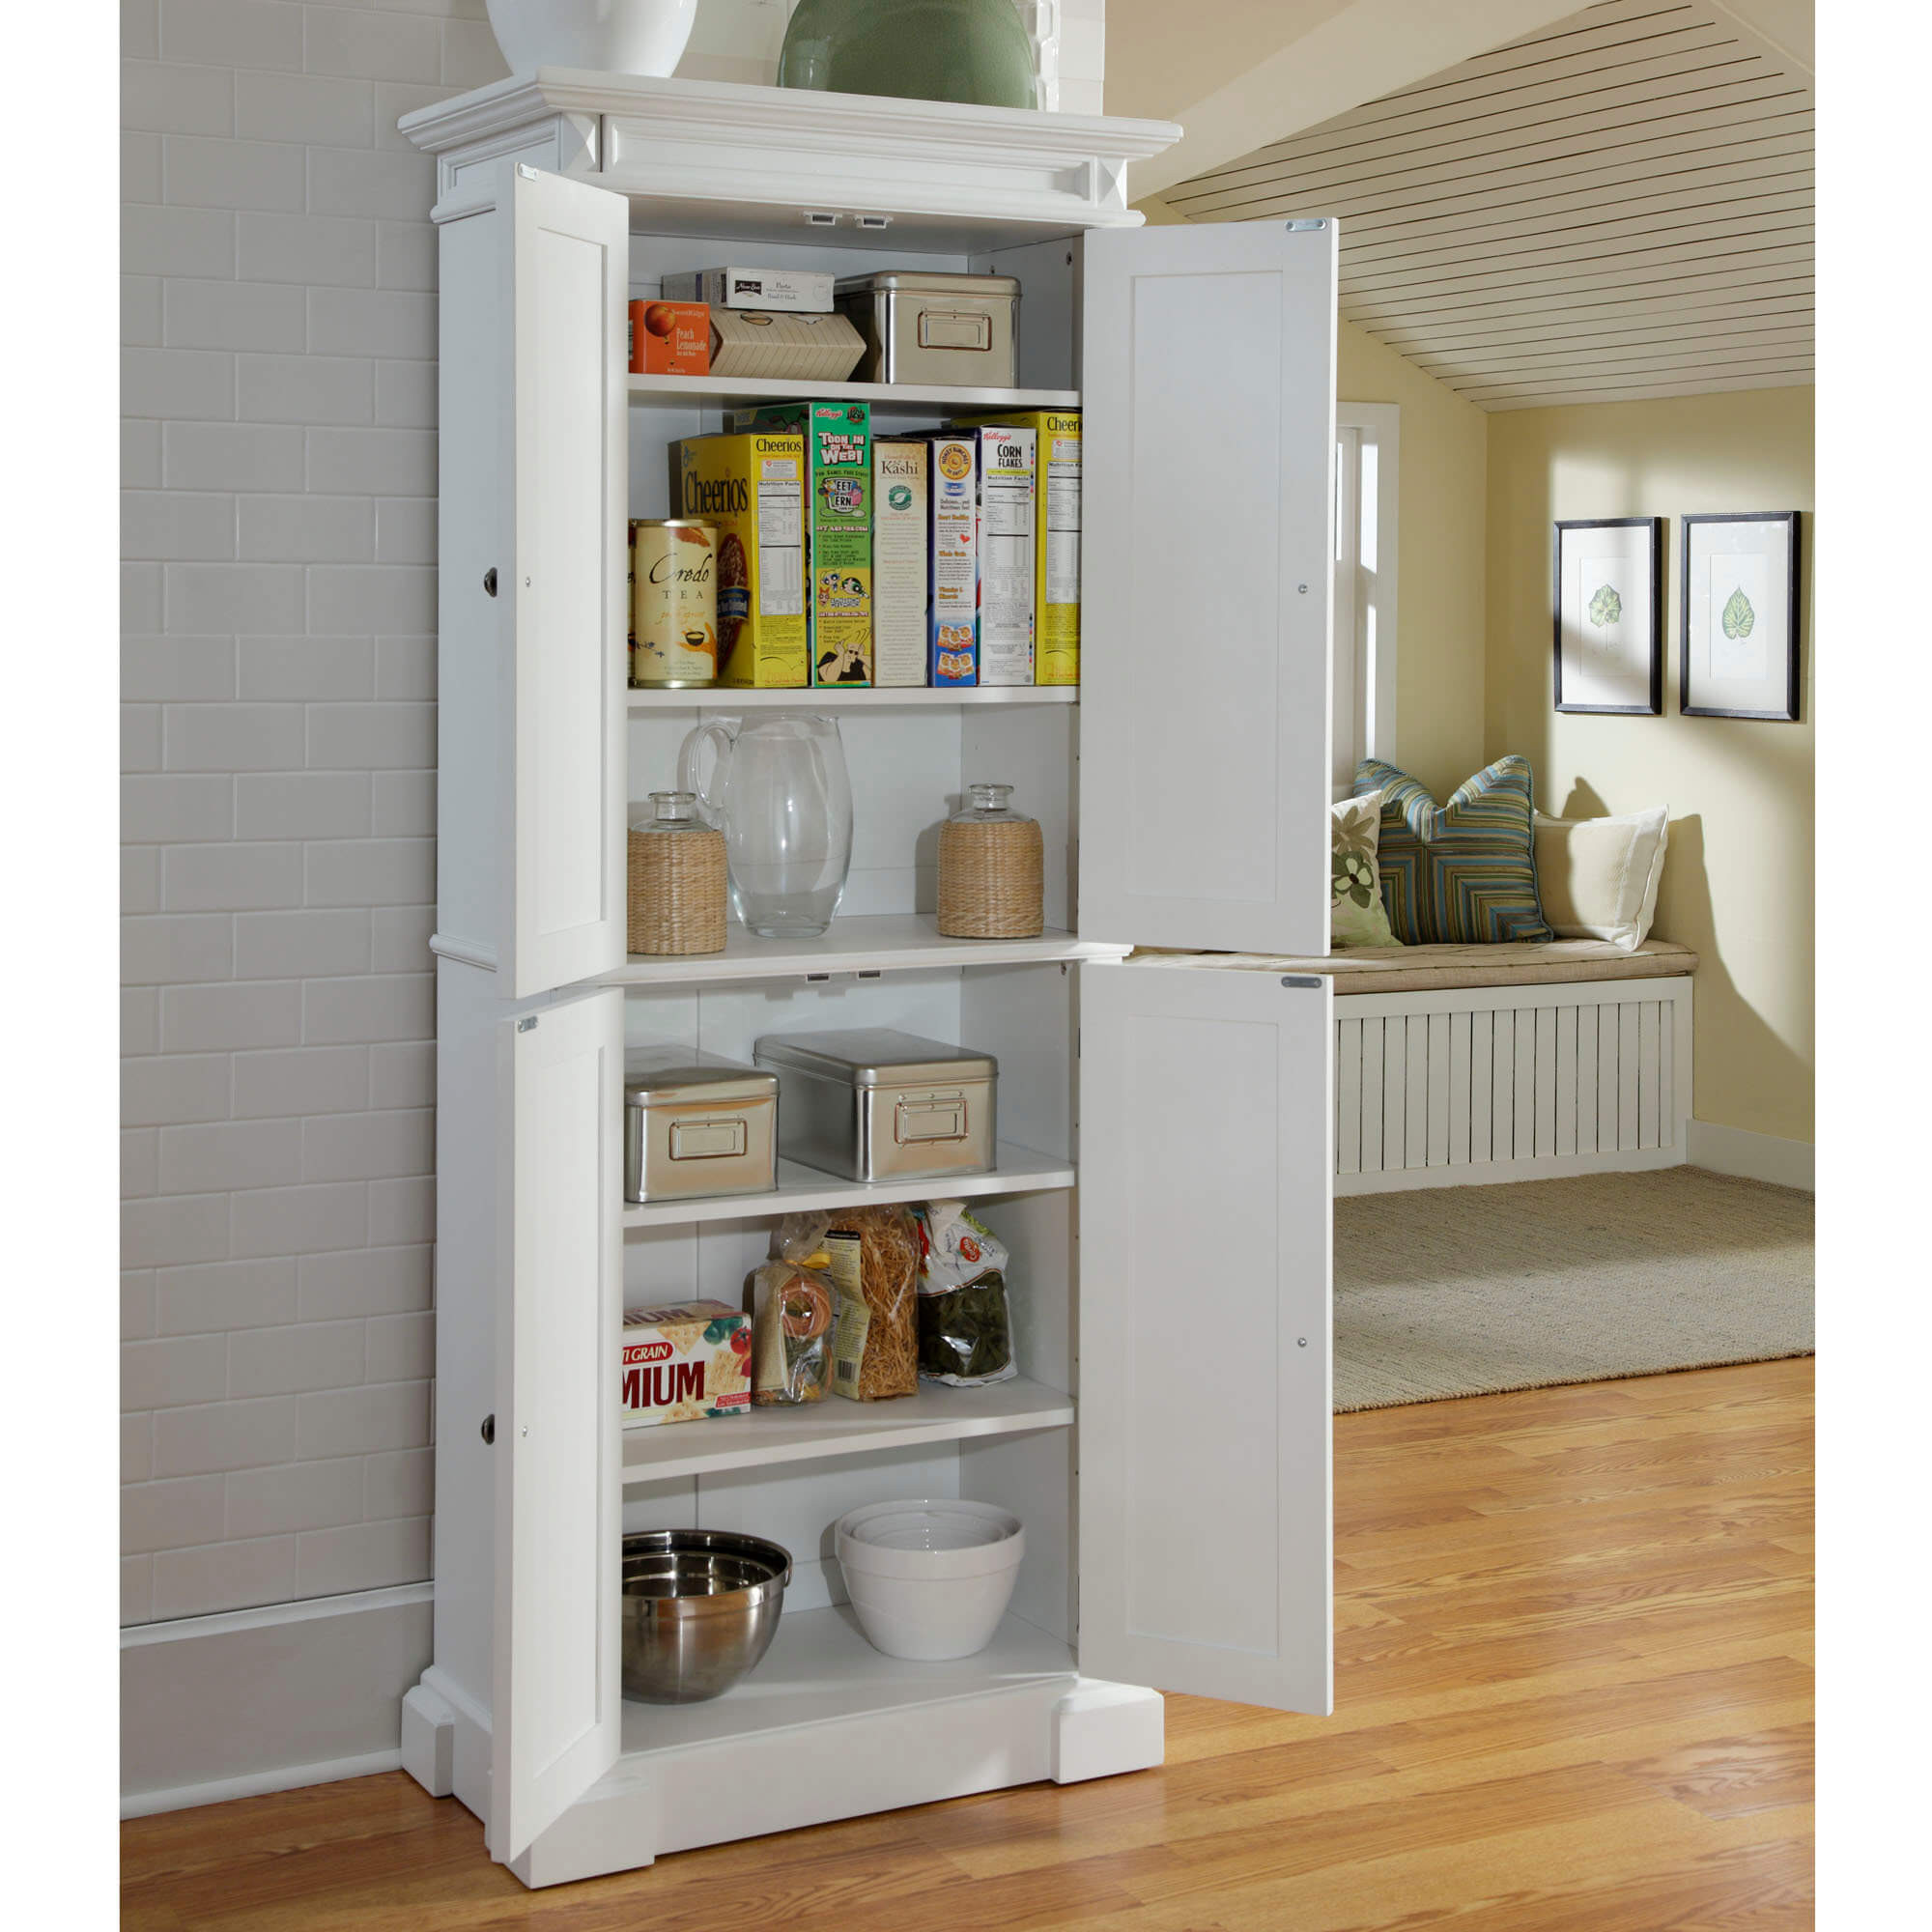 Home Depot Kitchen Storage
 Kitchen Pantry Cabinet Installation Guide TheyDesign